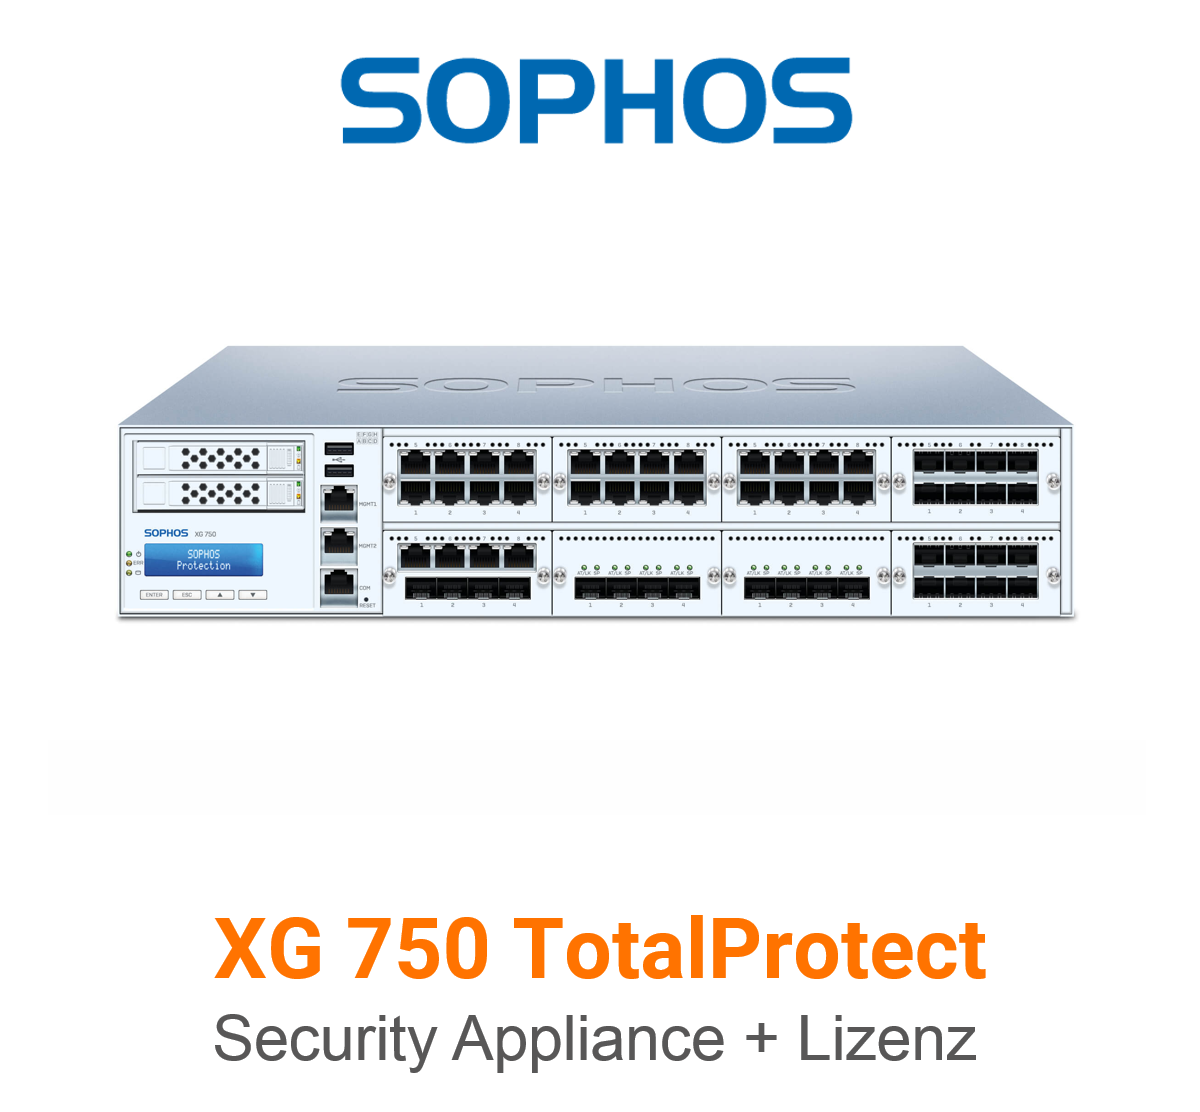 Sophos XG 750 TotalProtect Bundle (Hardware + Lizenz) (End of Sale/Life)